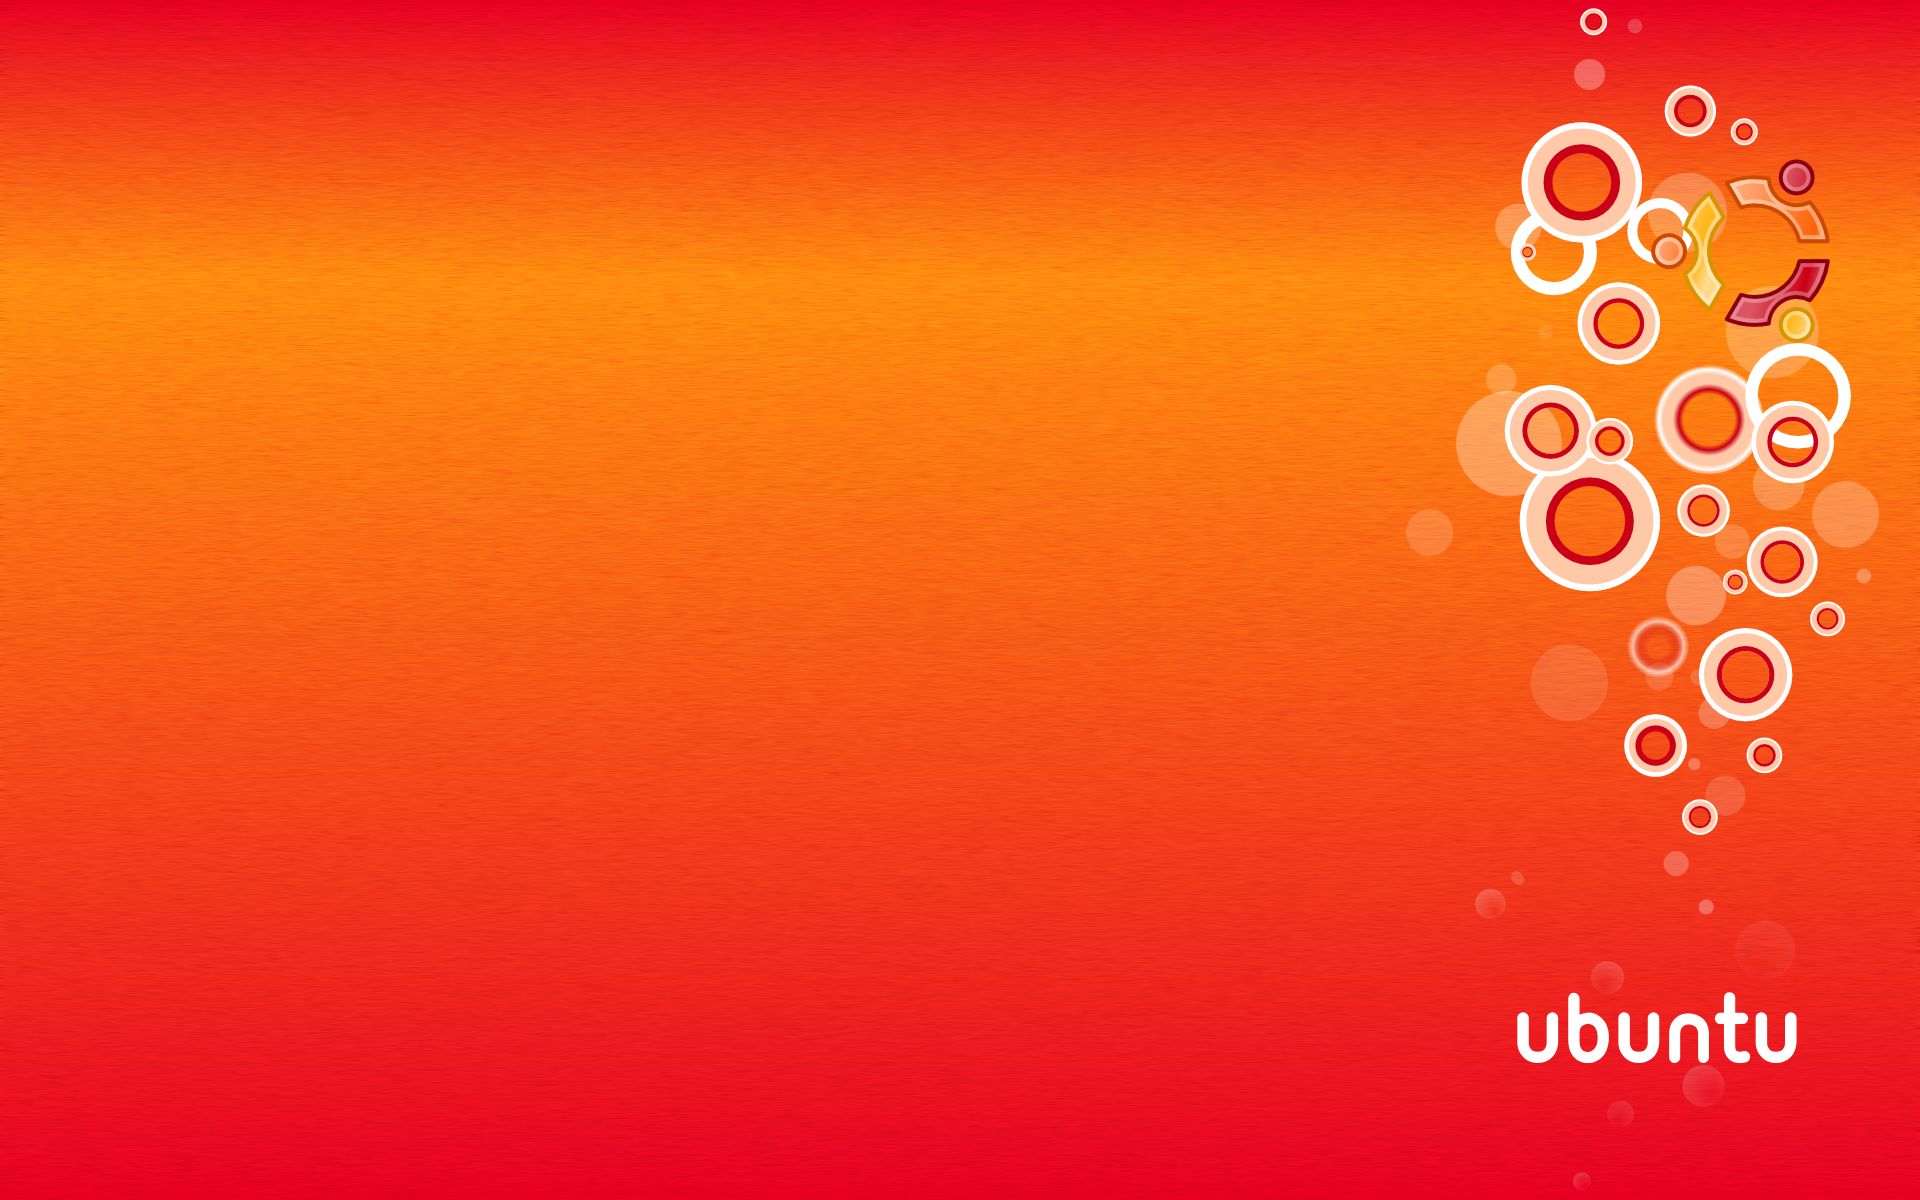 ubuntuの壁紙,赤,オレンジ,黄,空,桃